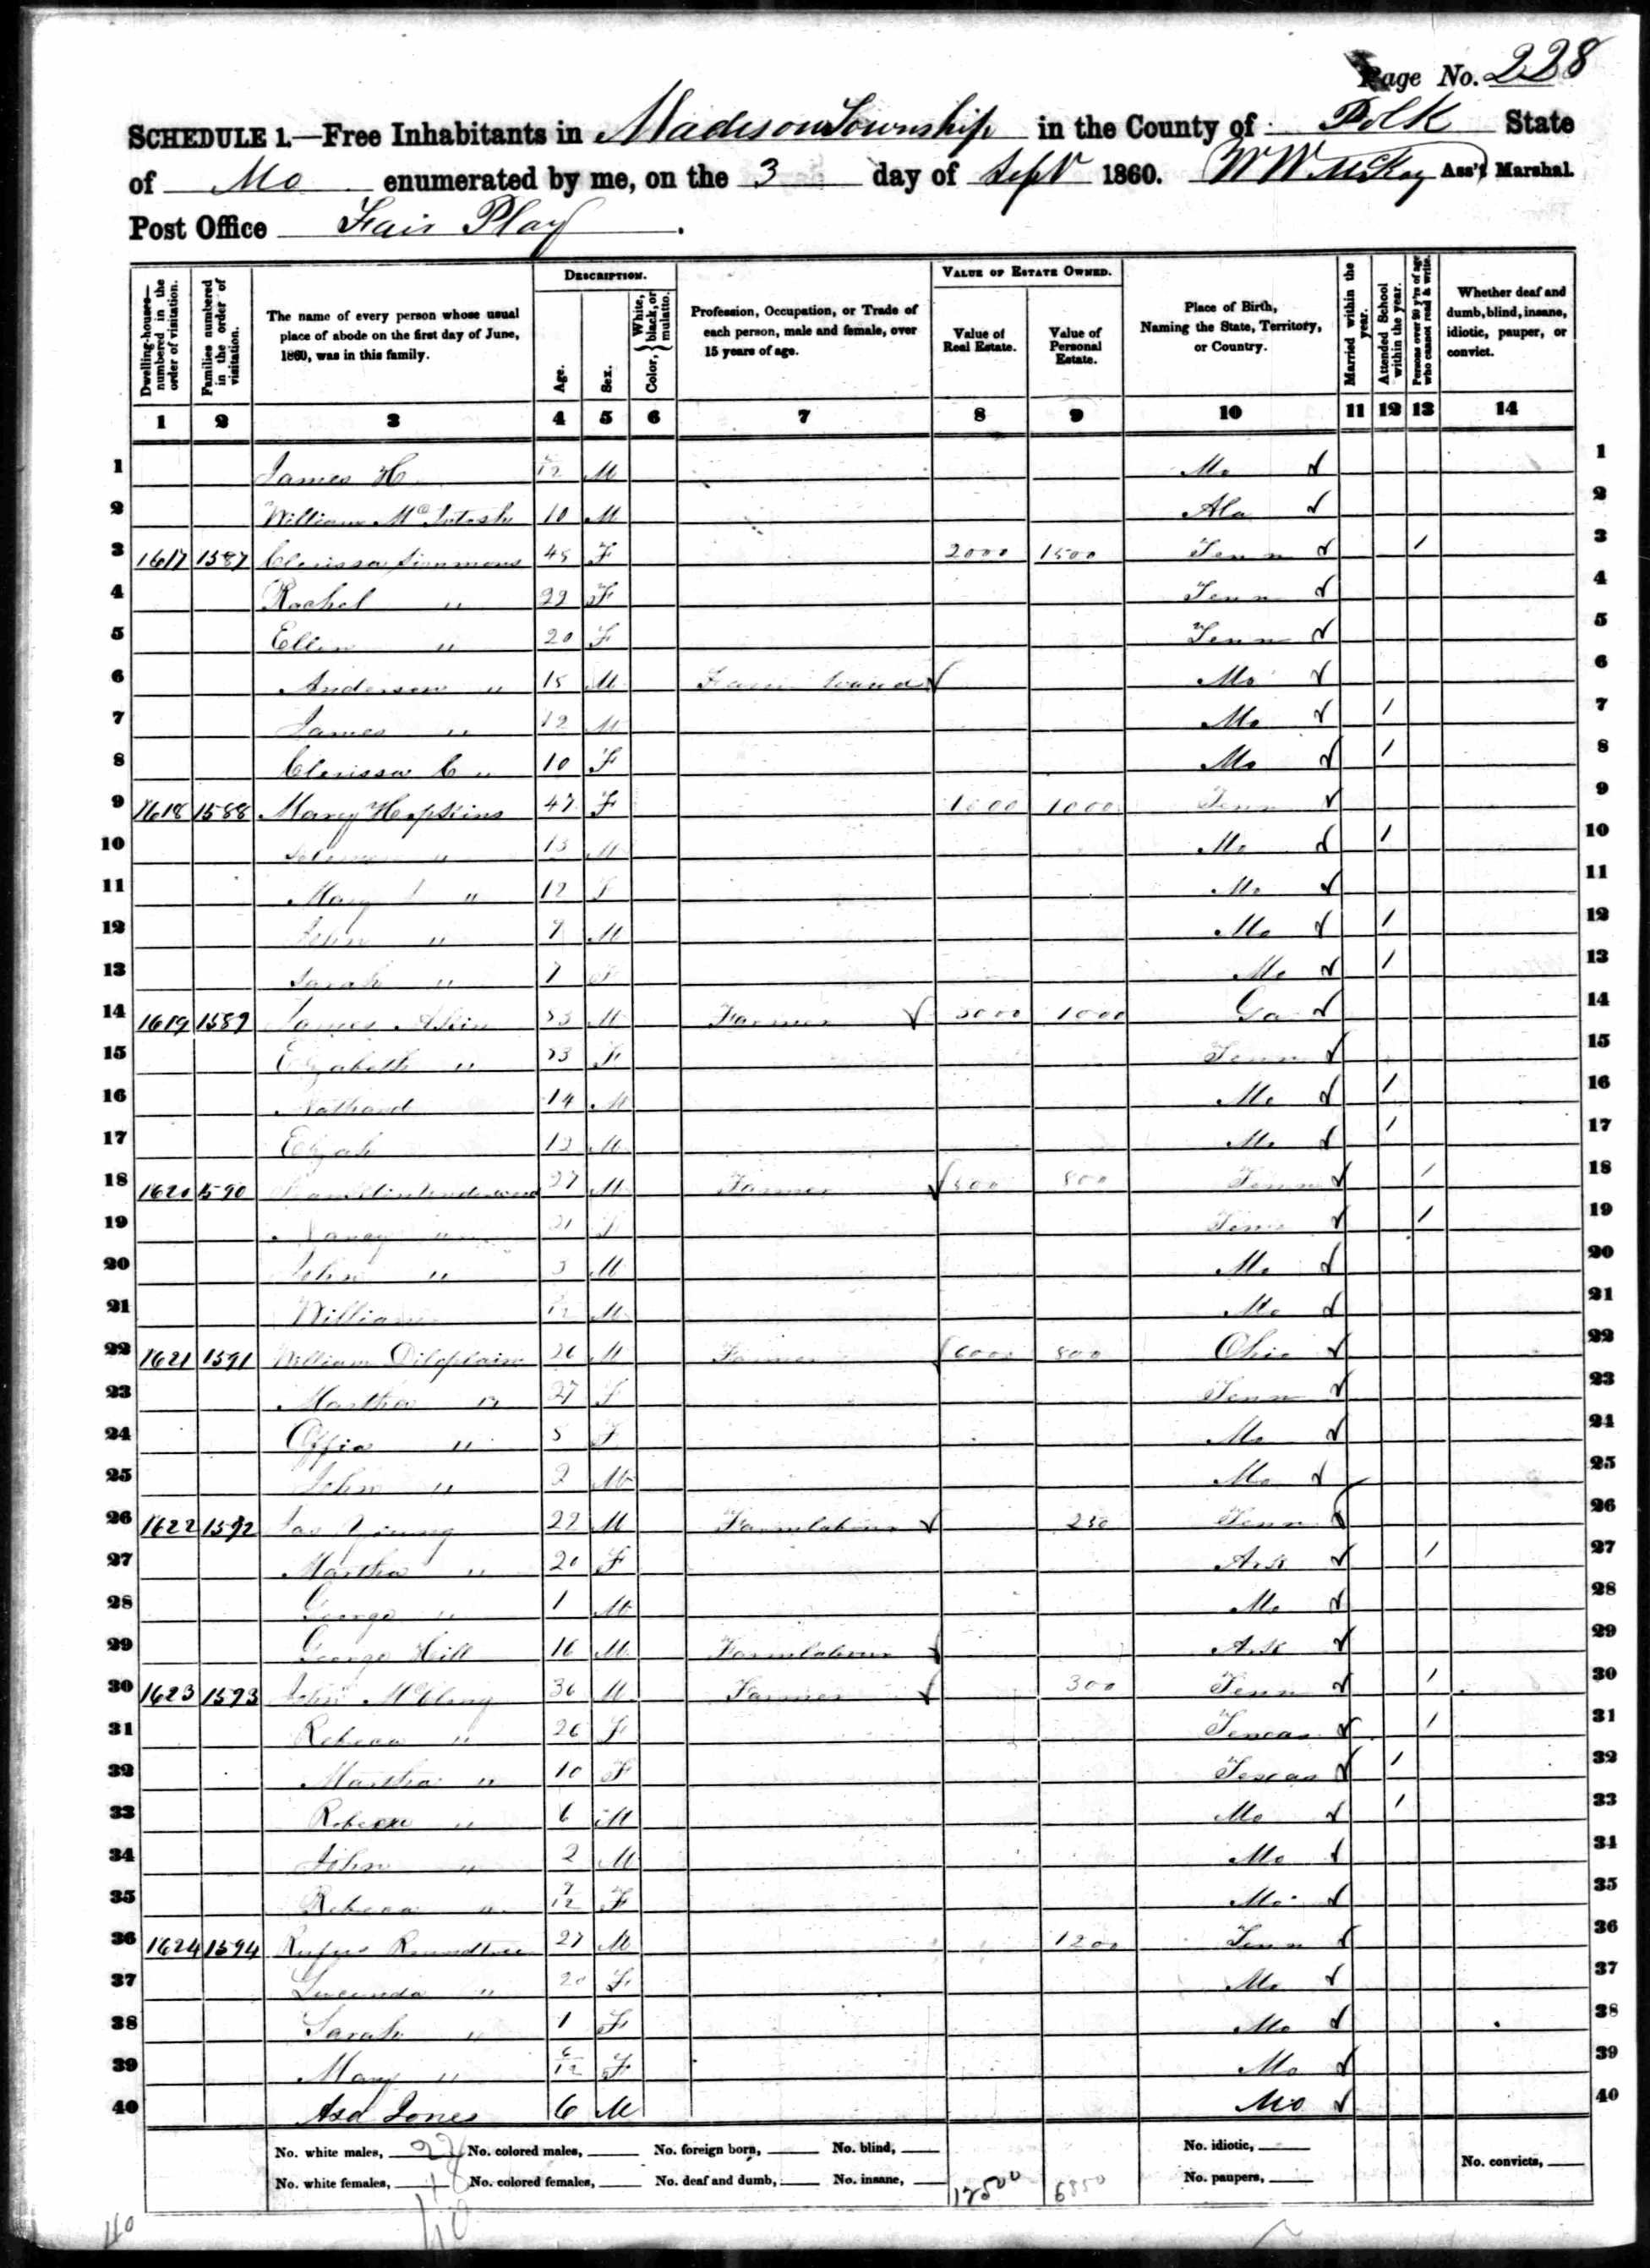 Mary E. (Hartley) Hopkins, widow of Solomon Hopkins, 1860 Polk County, Missouri, census